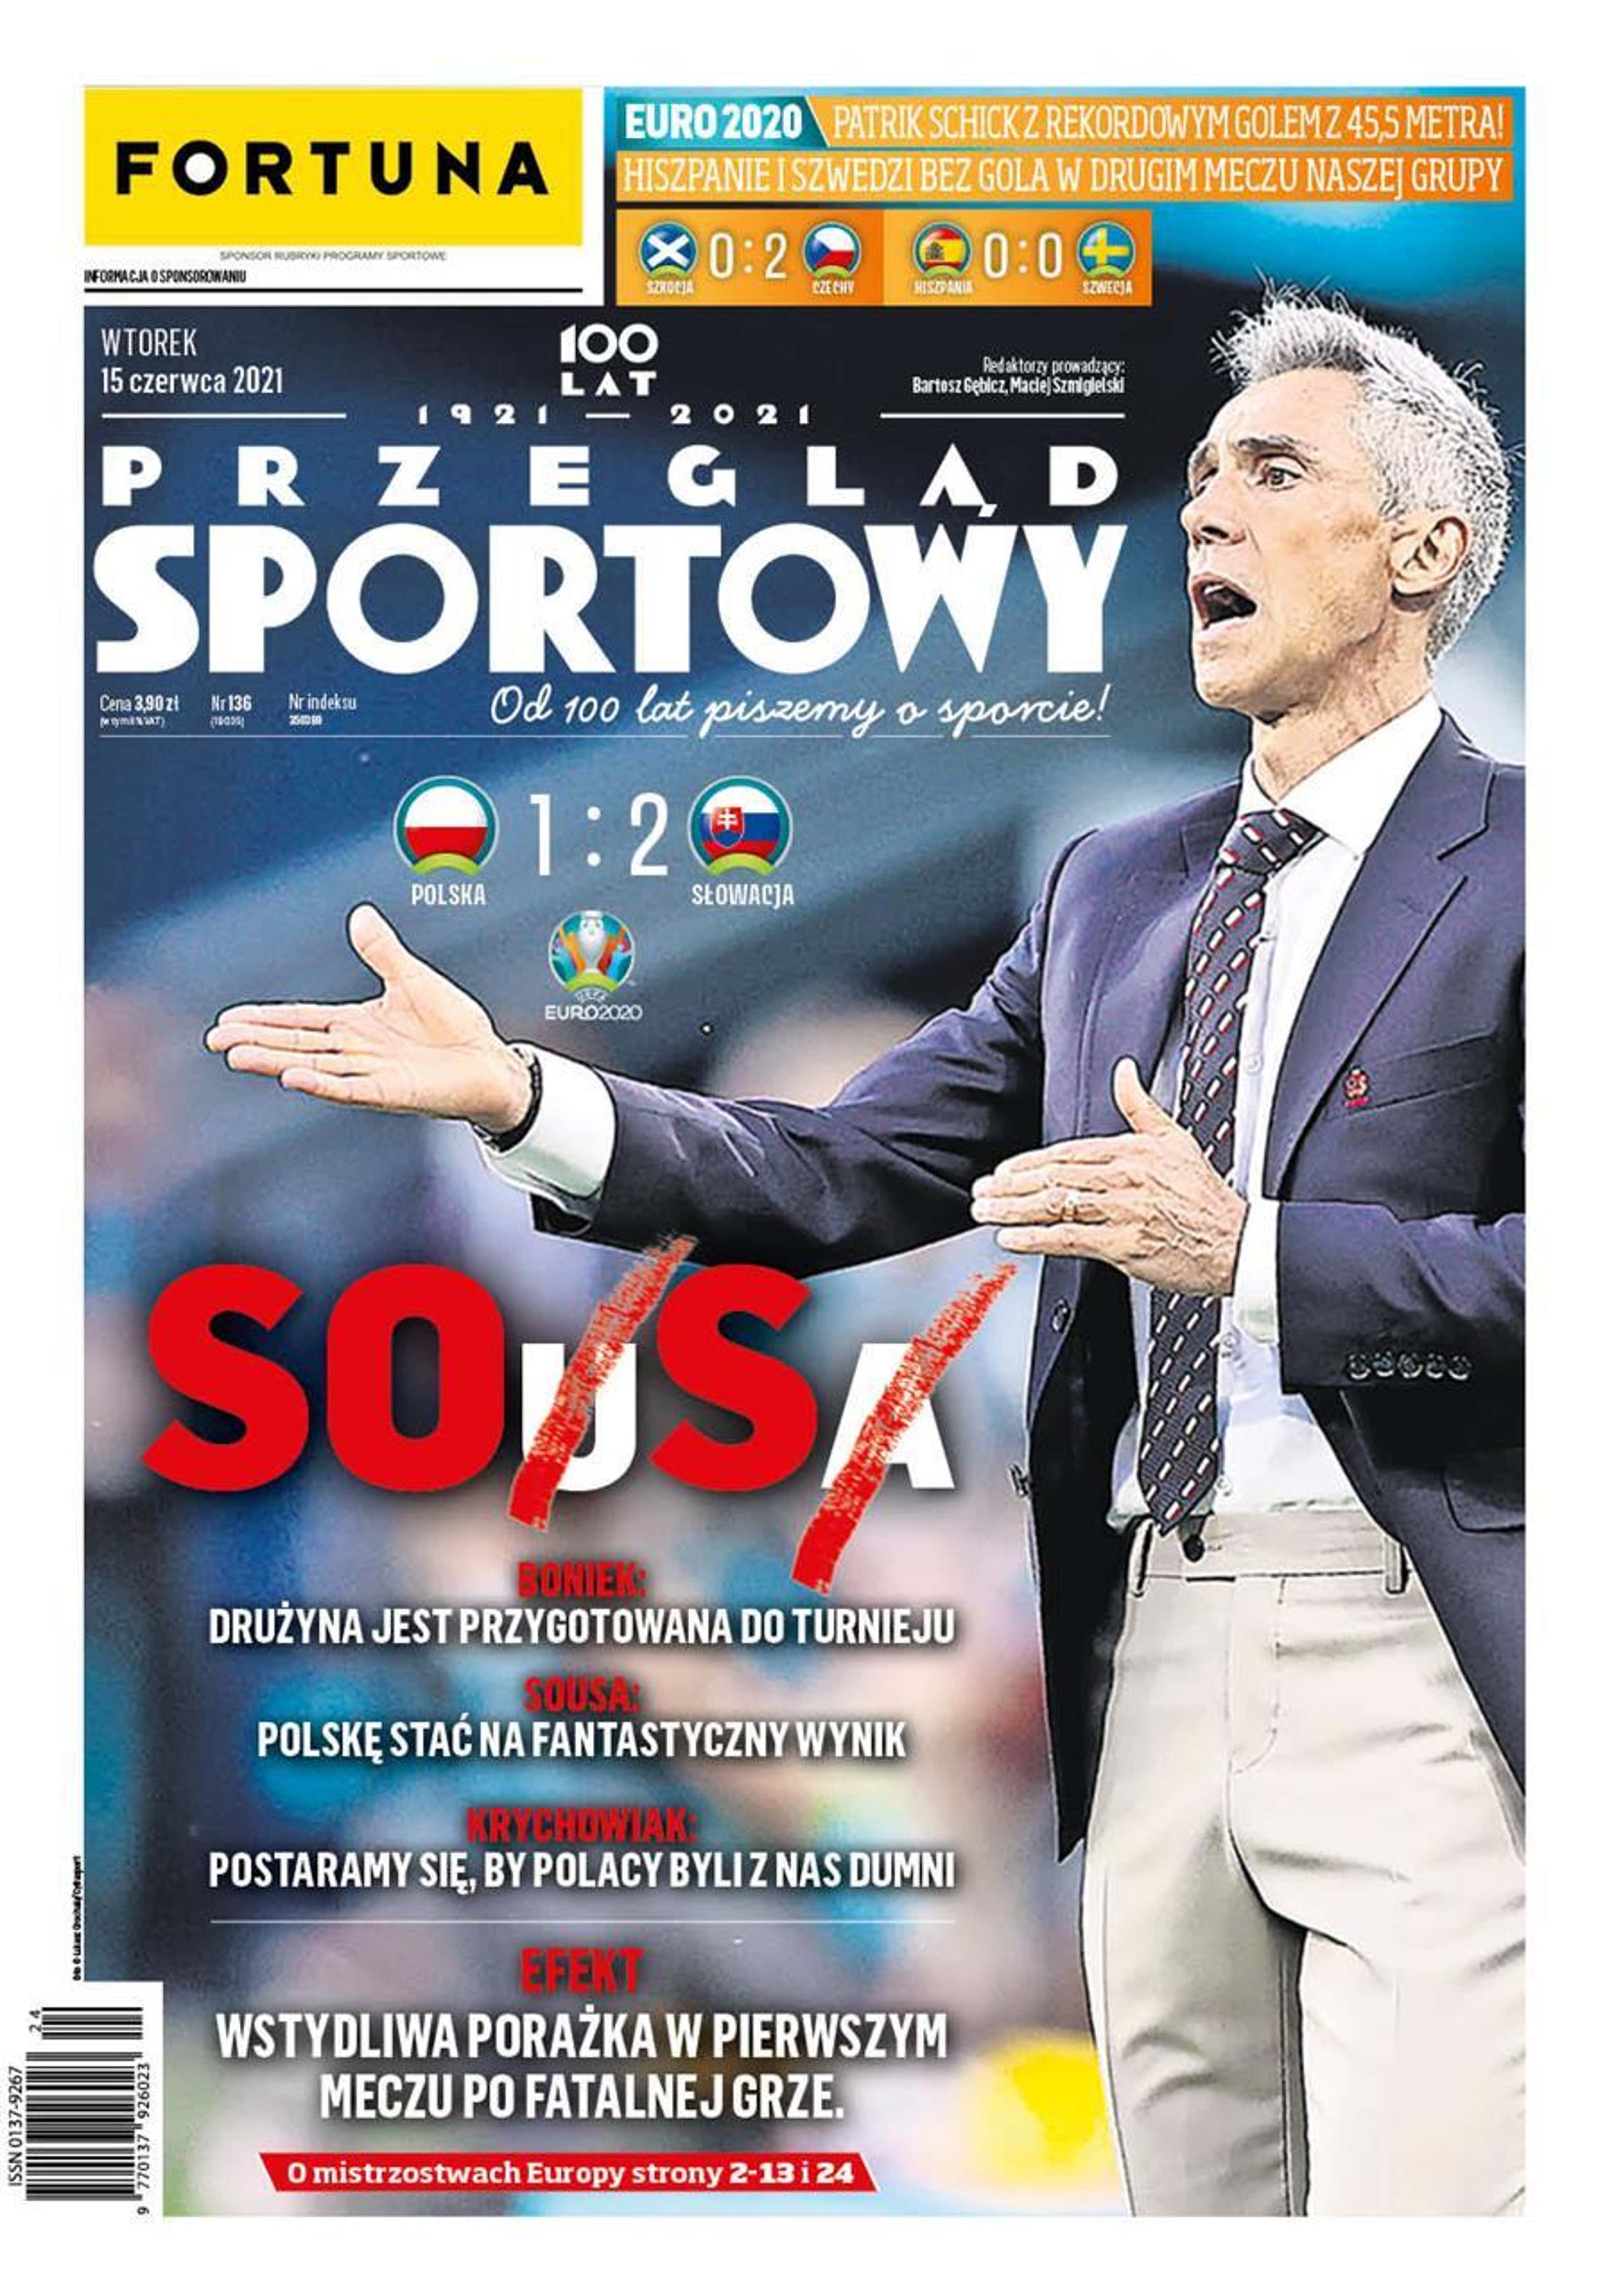 Przeglad Sportowy Sousa frontpage